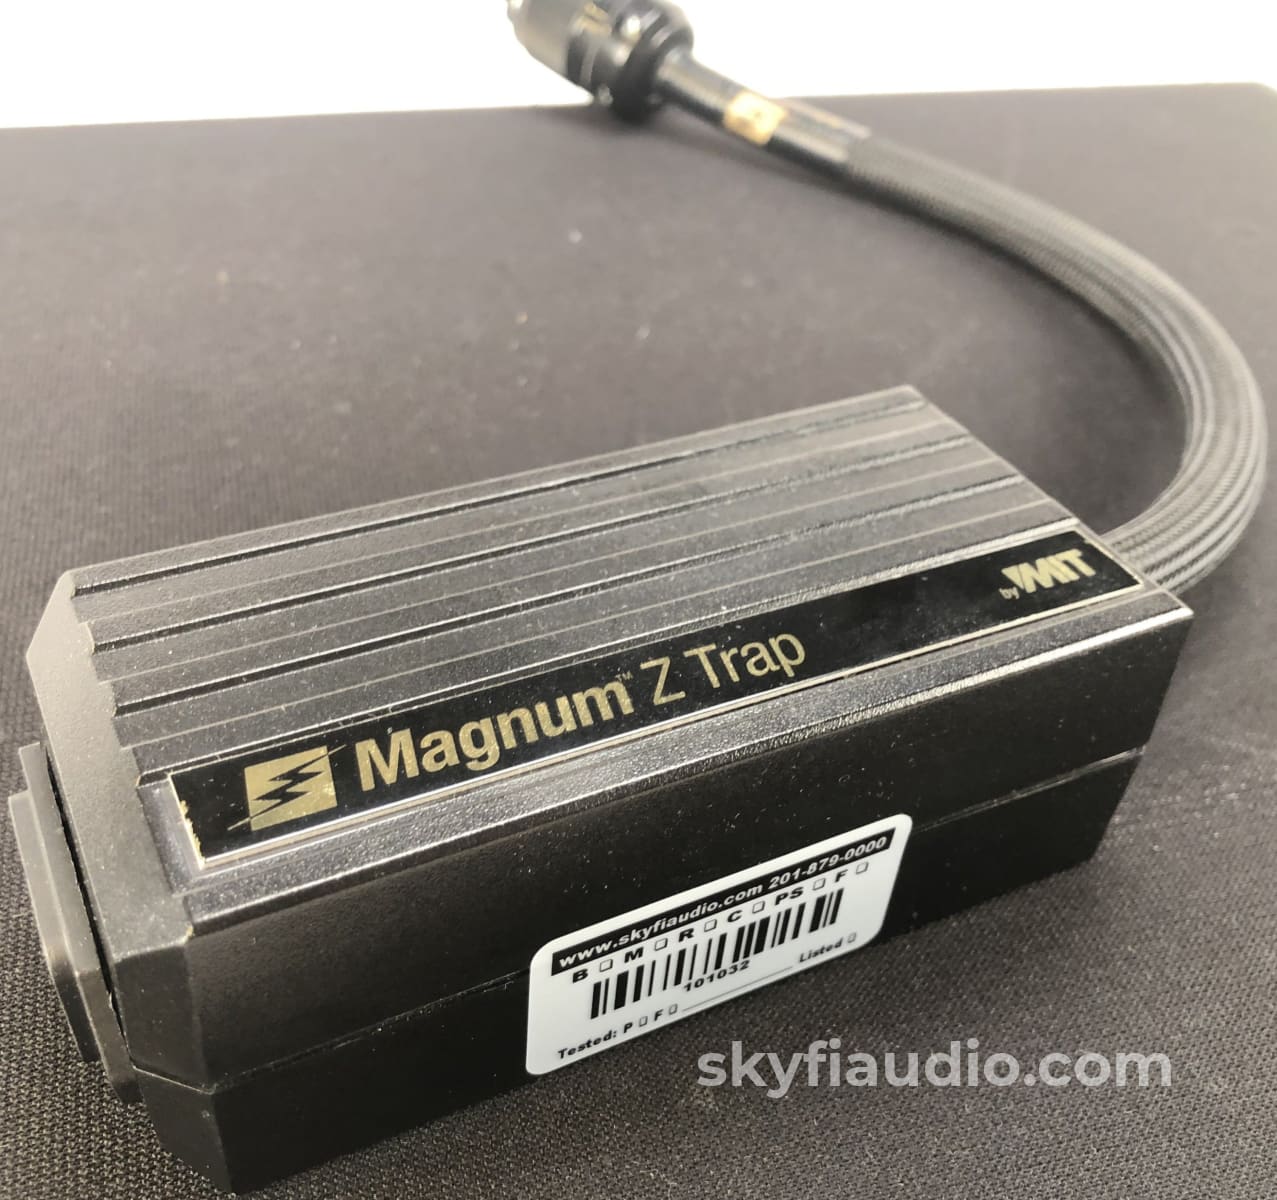 Mit (Music Interface Technologies) Magnum Z-Trap Series Modular Ac Filter Power Conditioner